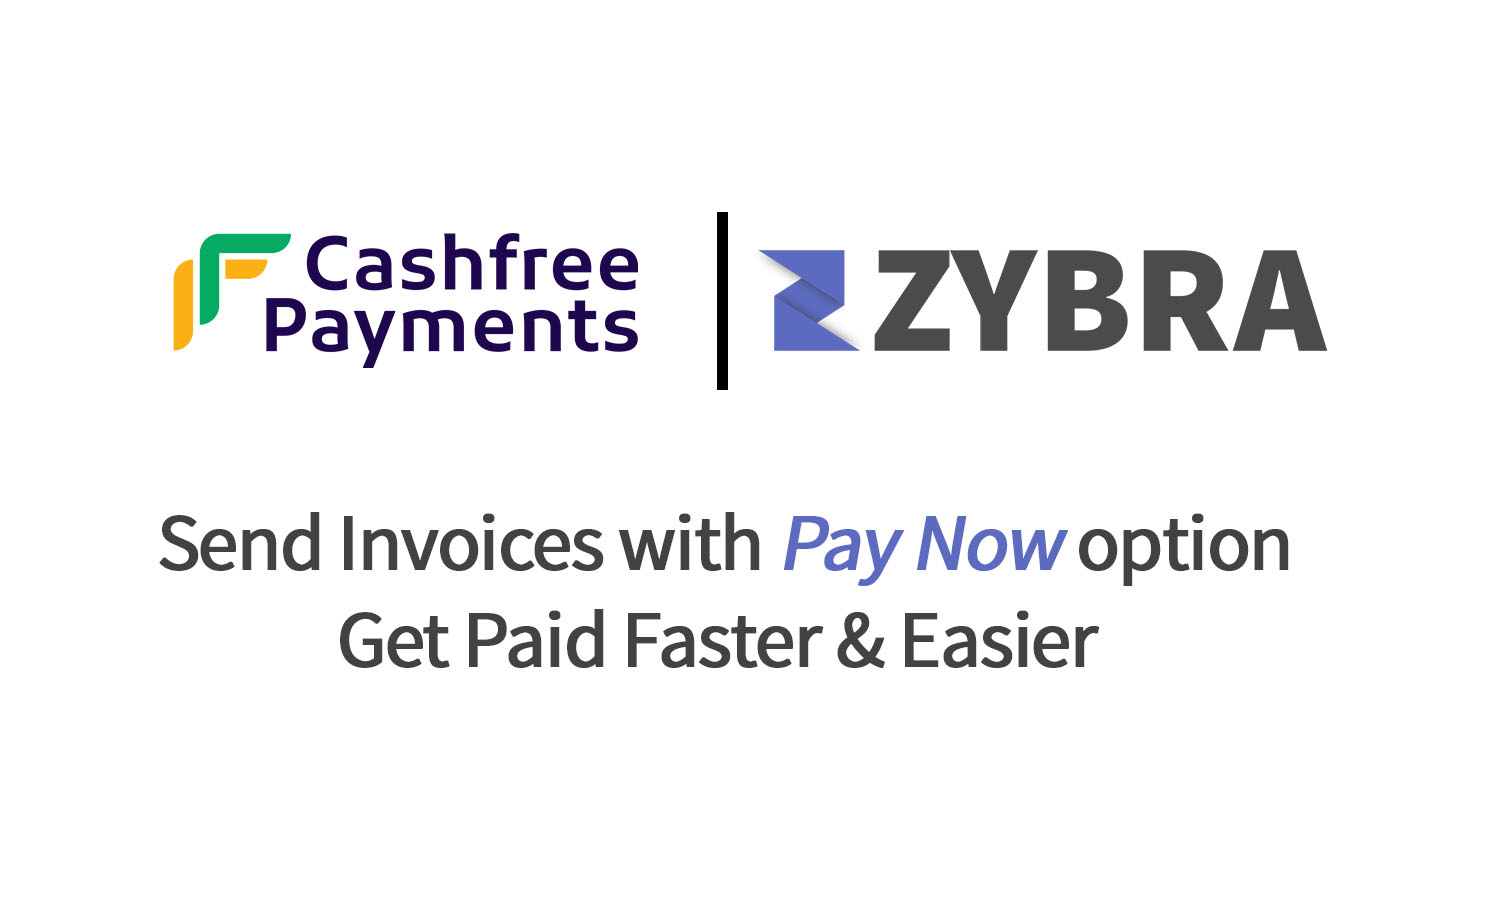 Zybra in Partnership with Cashfree making digital paymetns easier for Indan Businesses